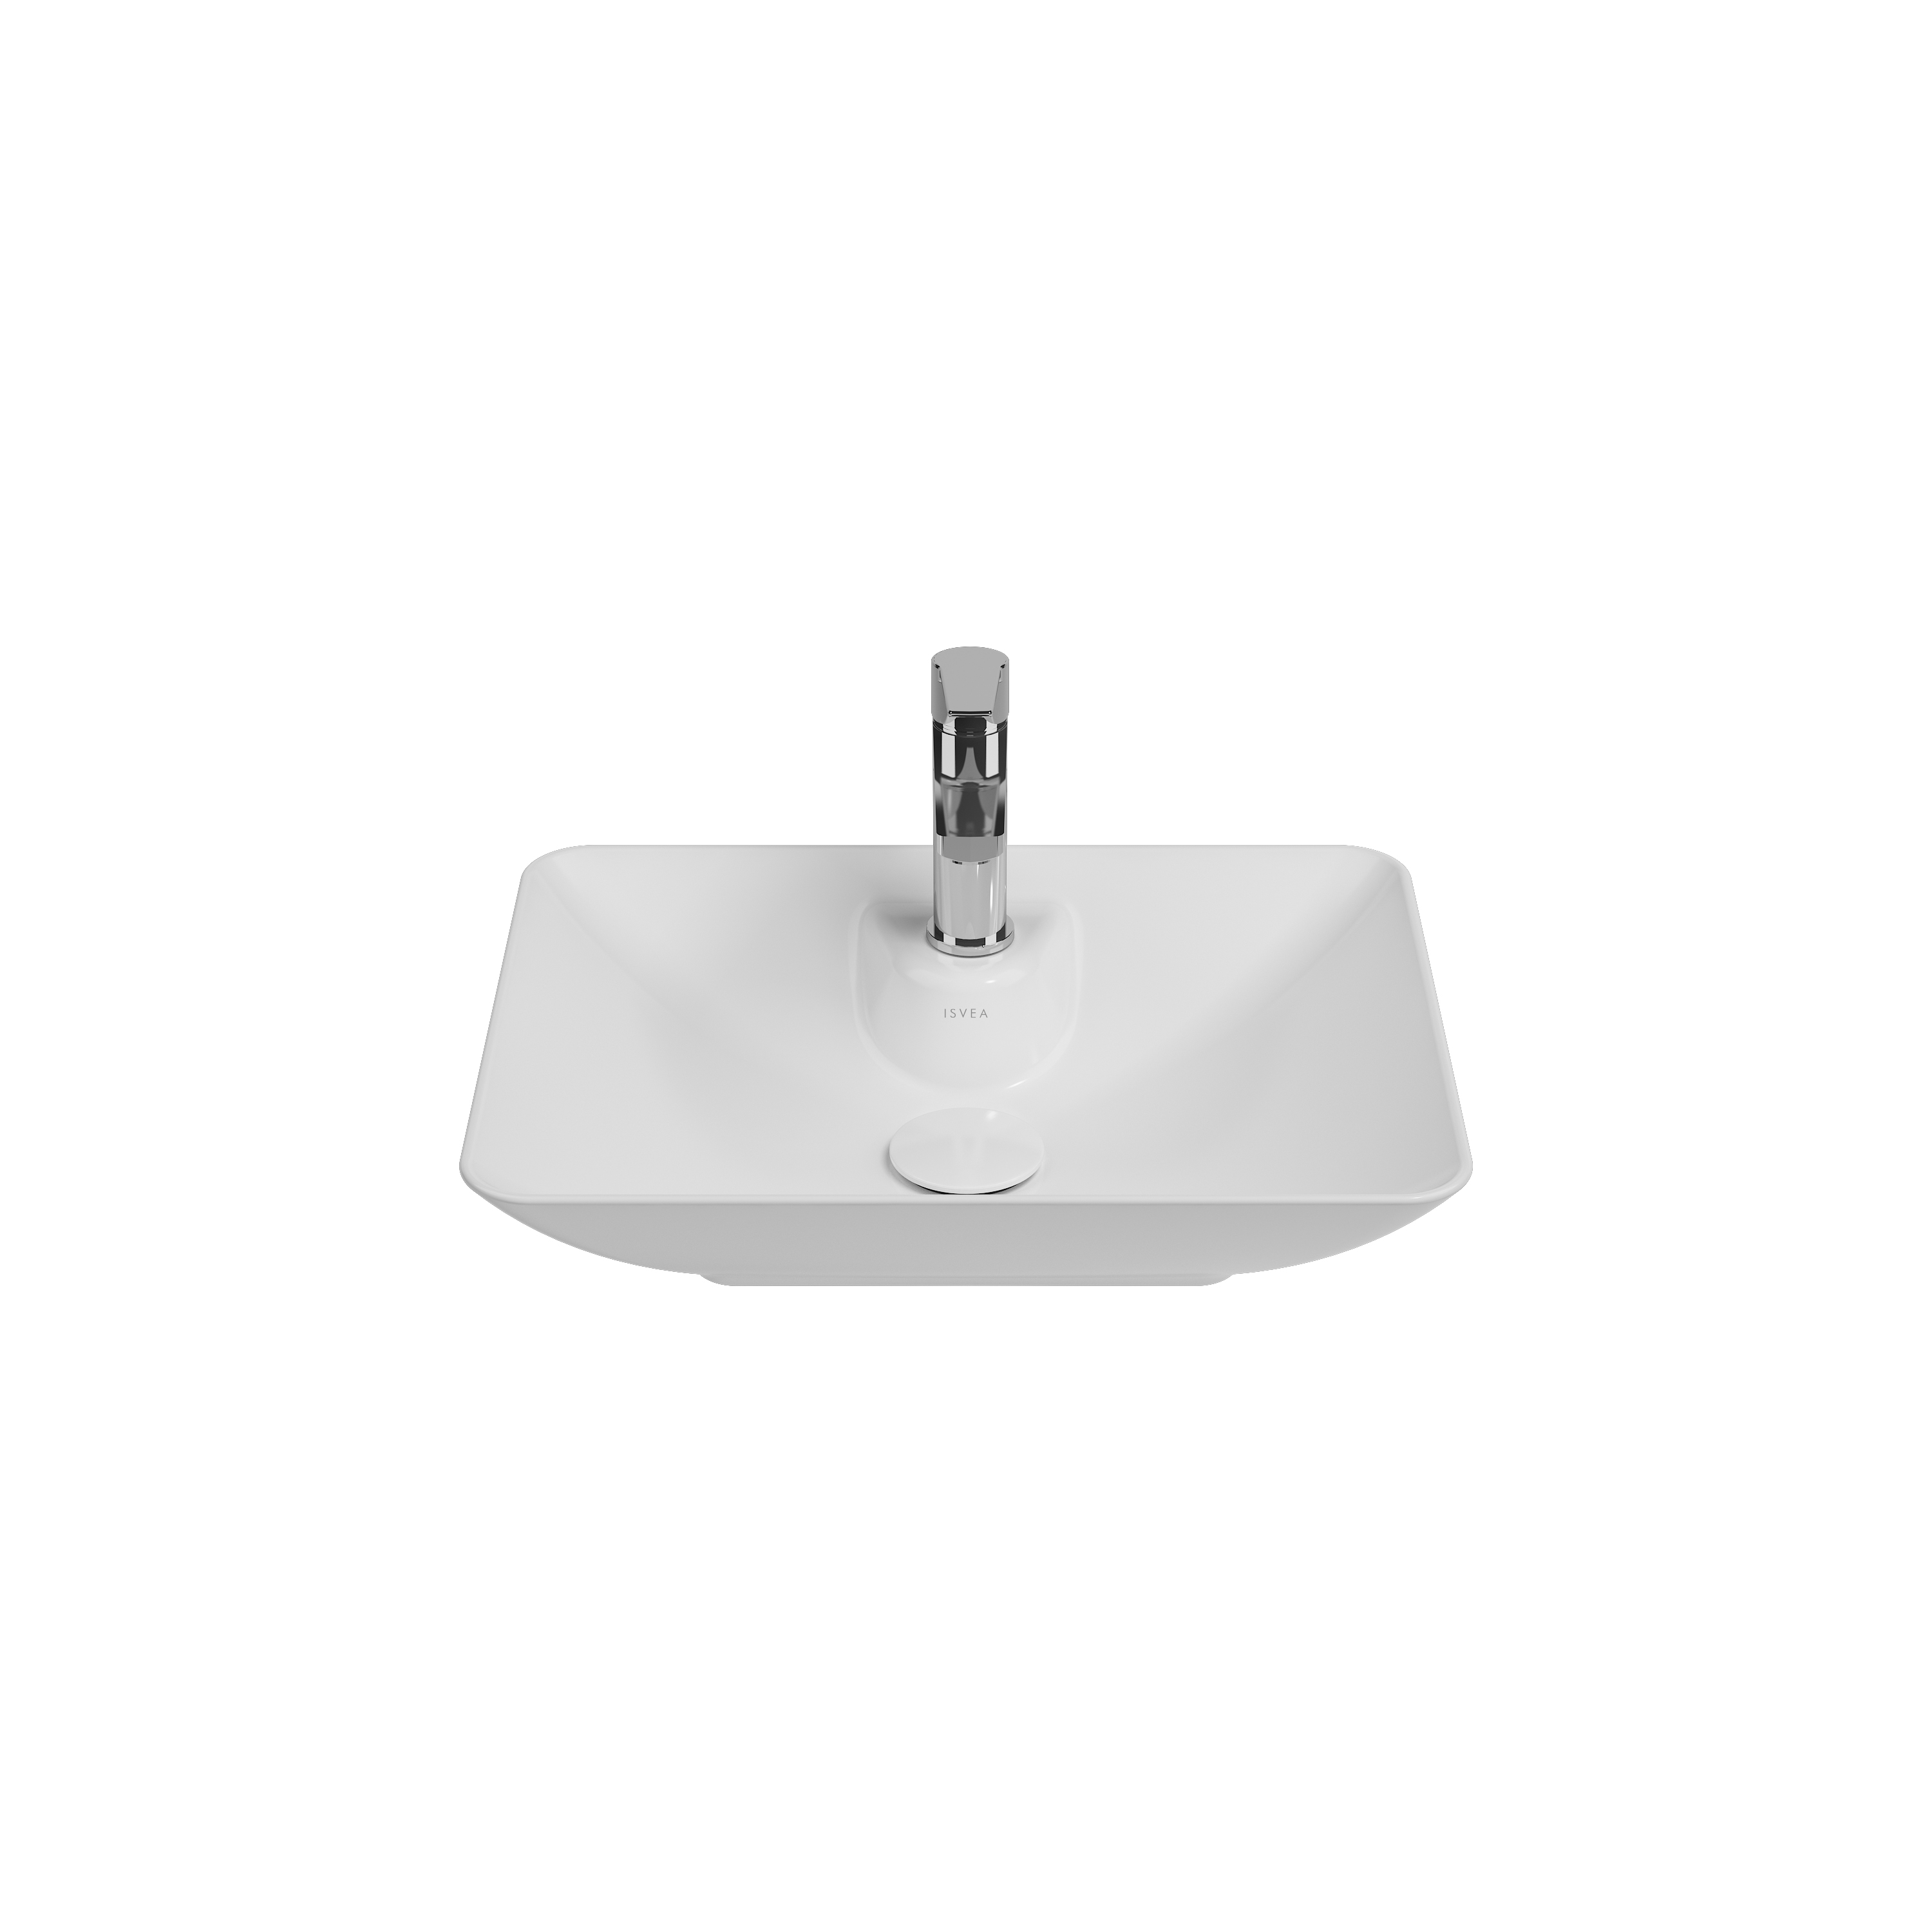 SistemaY Countertop Washbasin, 52 cm